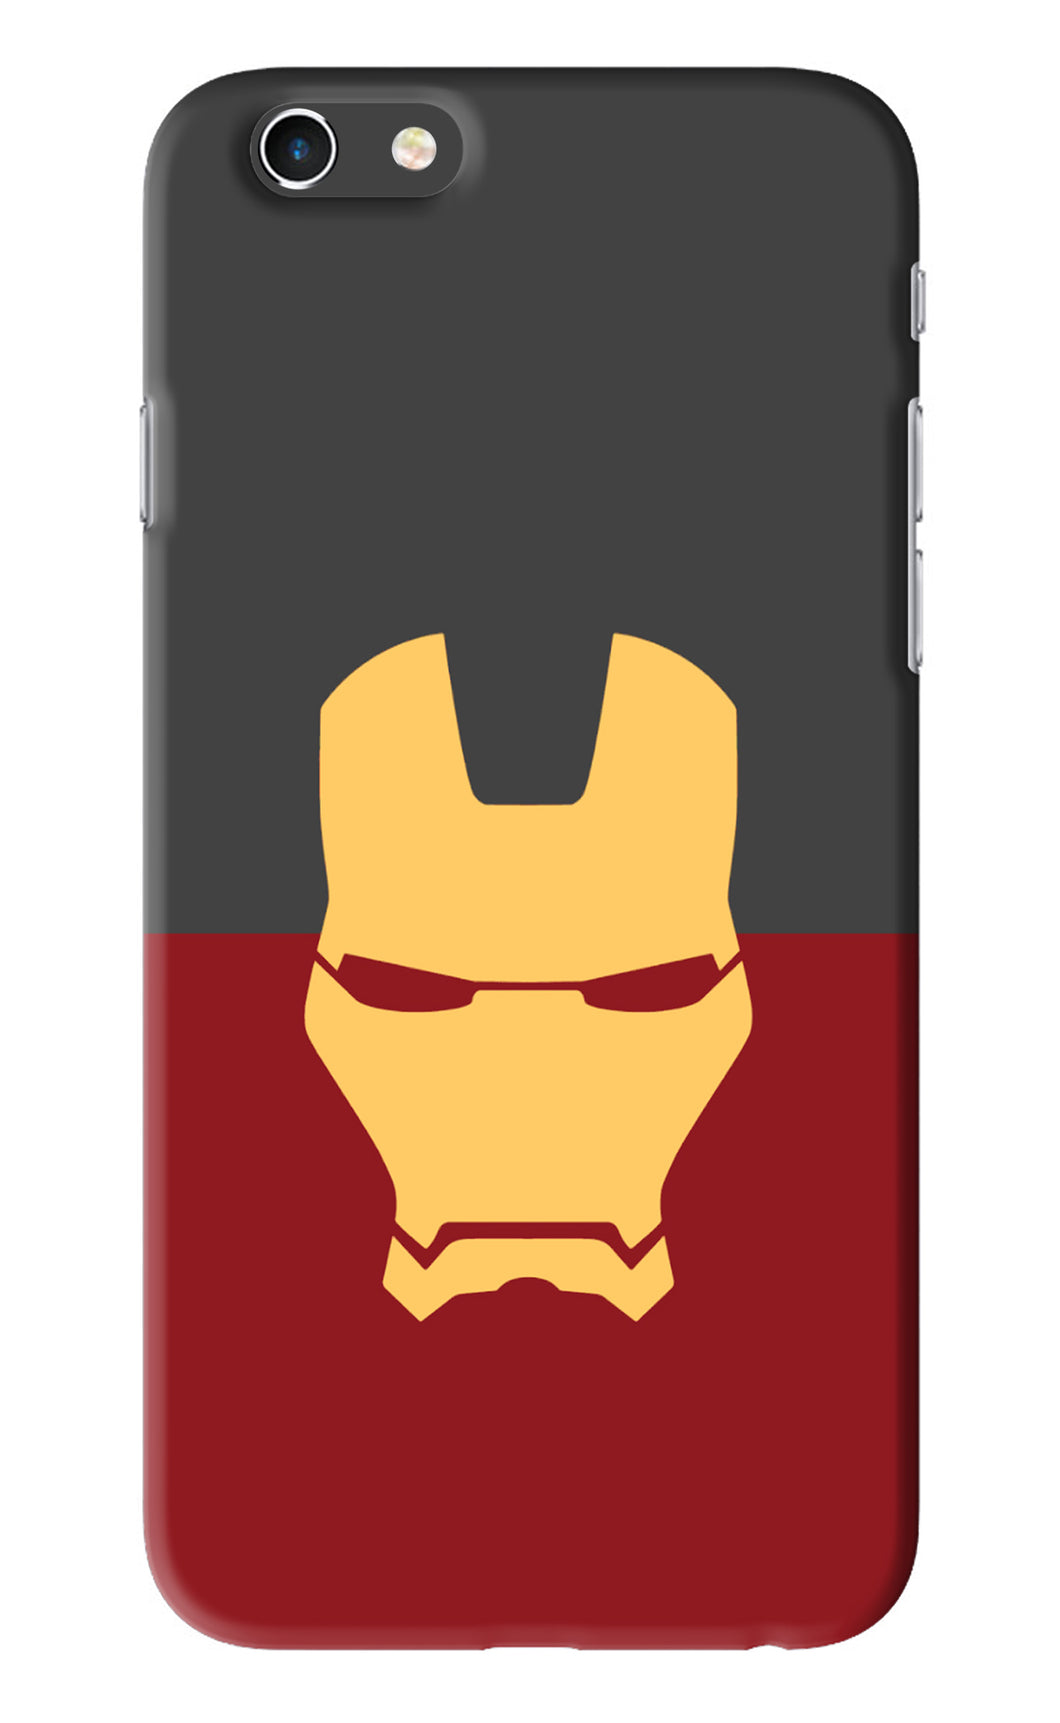 Ironman iPhone 6S Back Skin Wrap